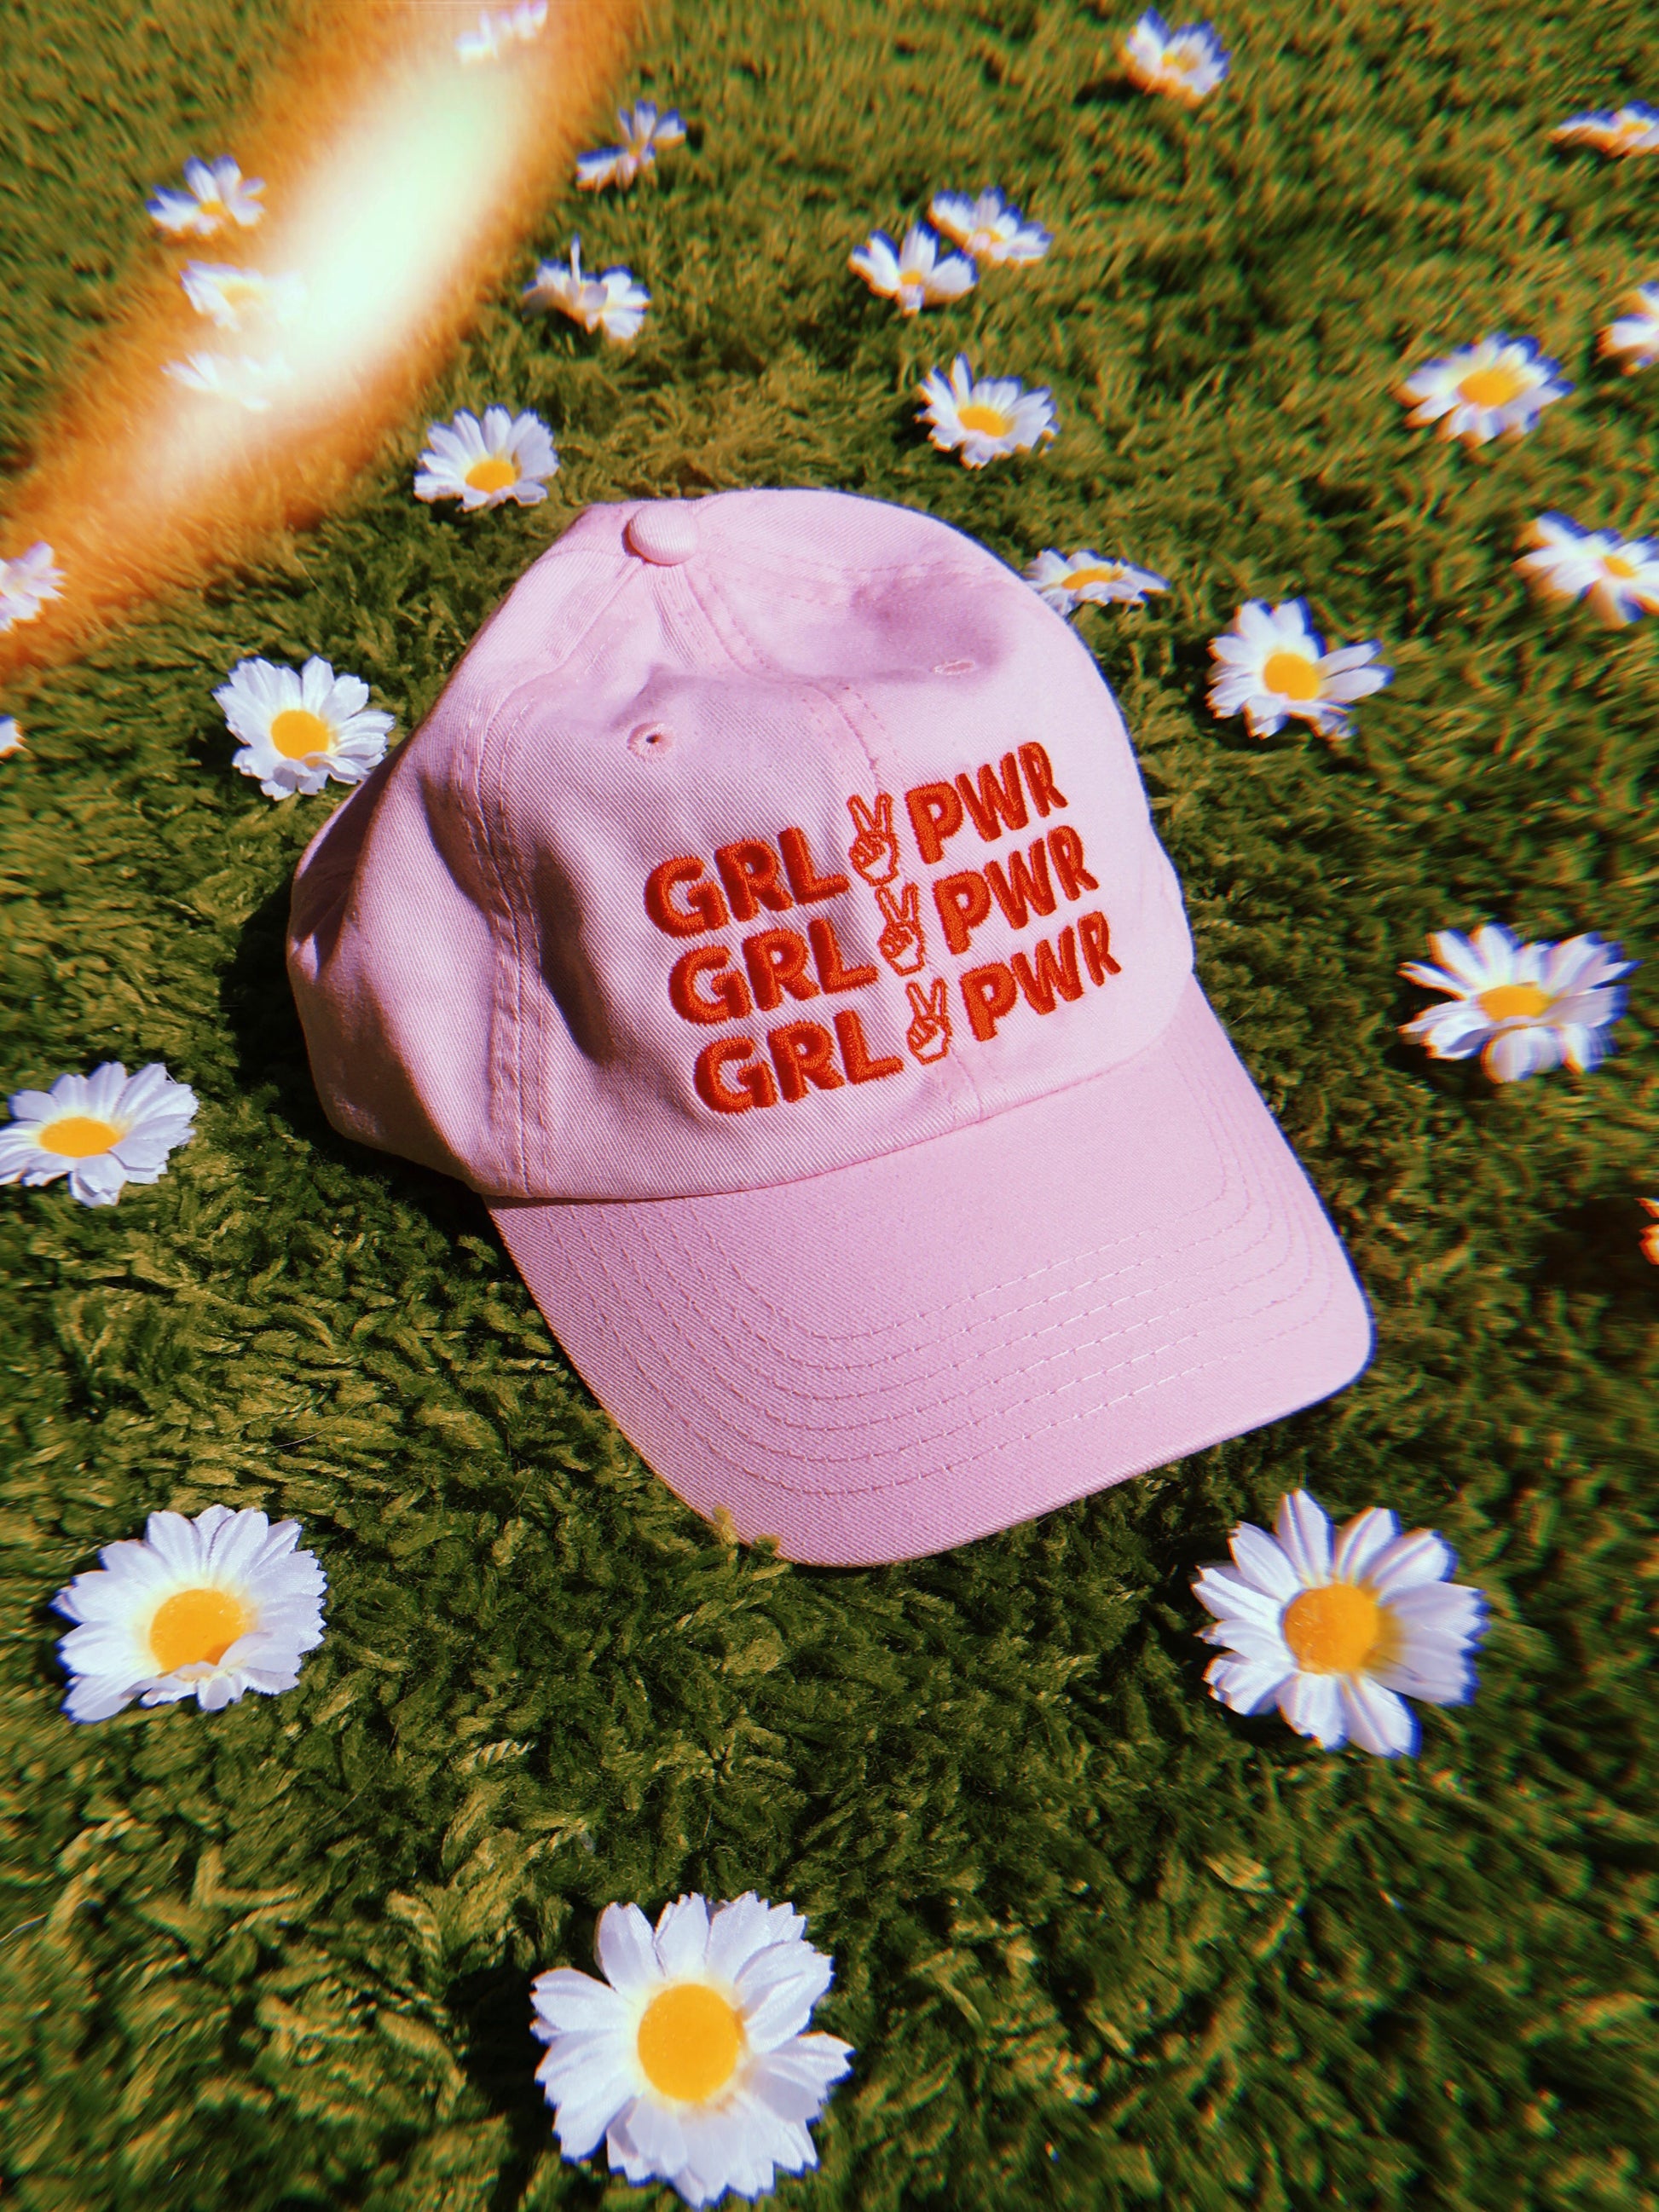  hat - GIRL POWER Baseball Cap - Light Pink - REDWOLF